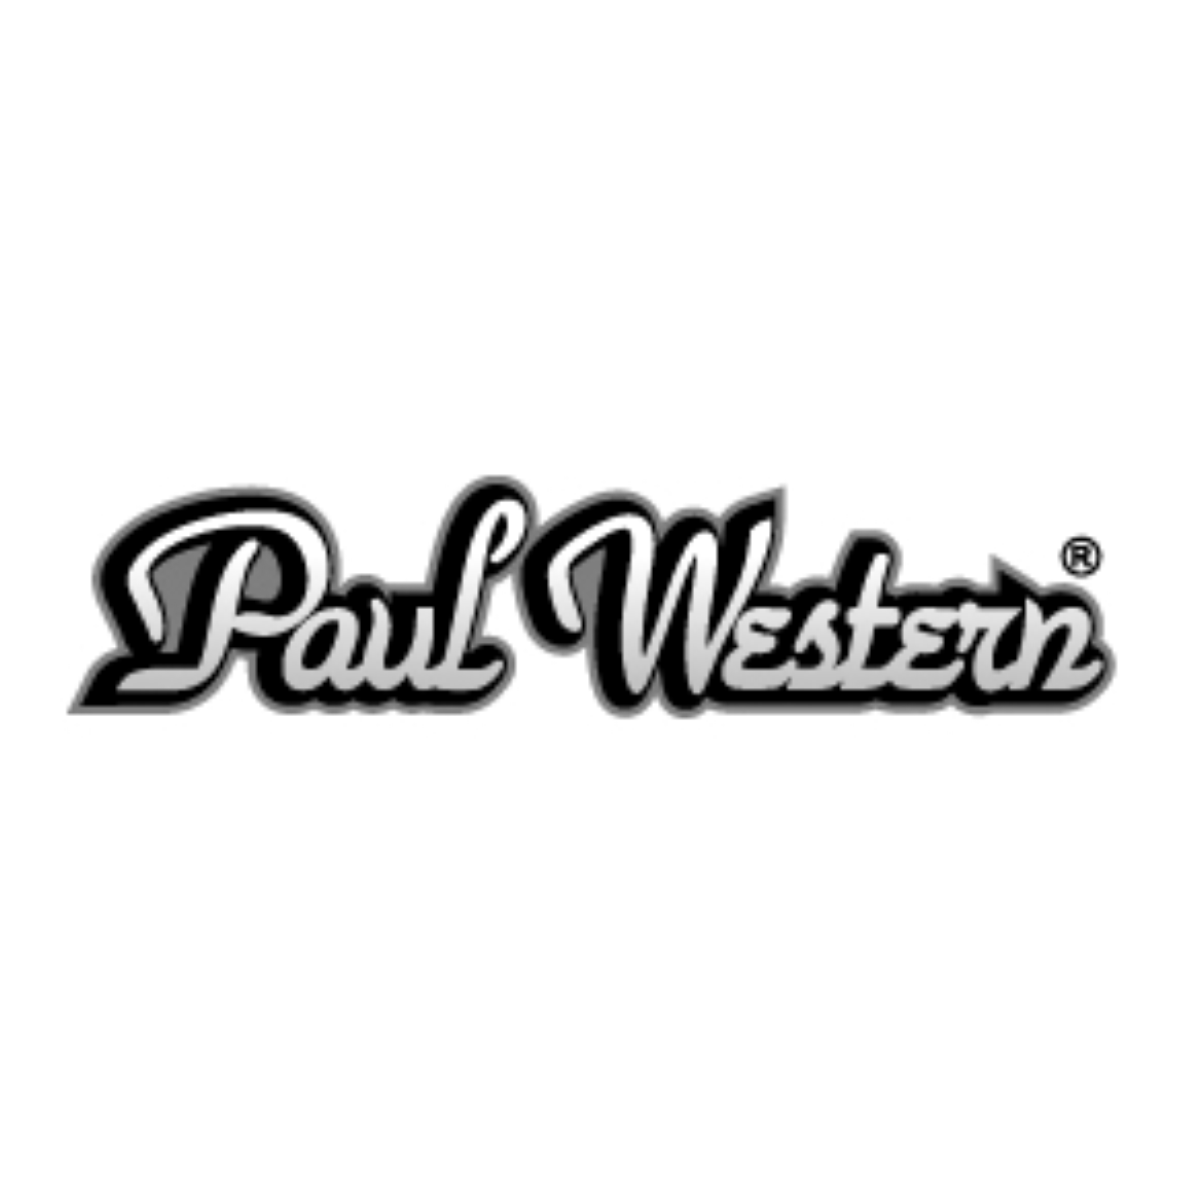 Paul Western